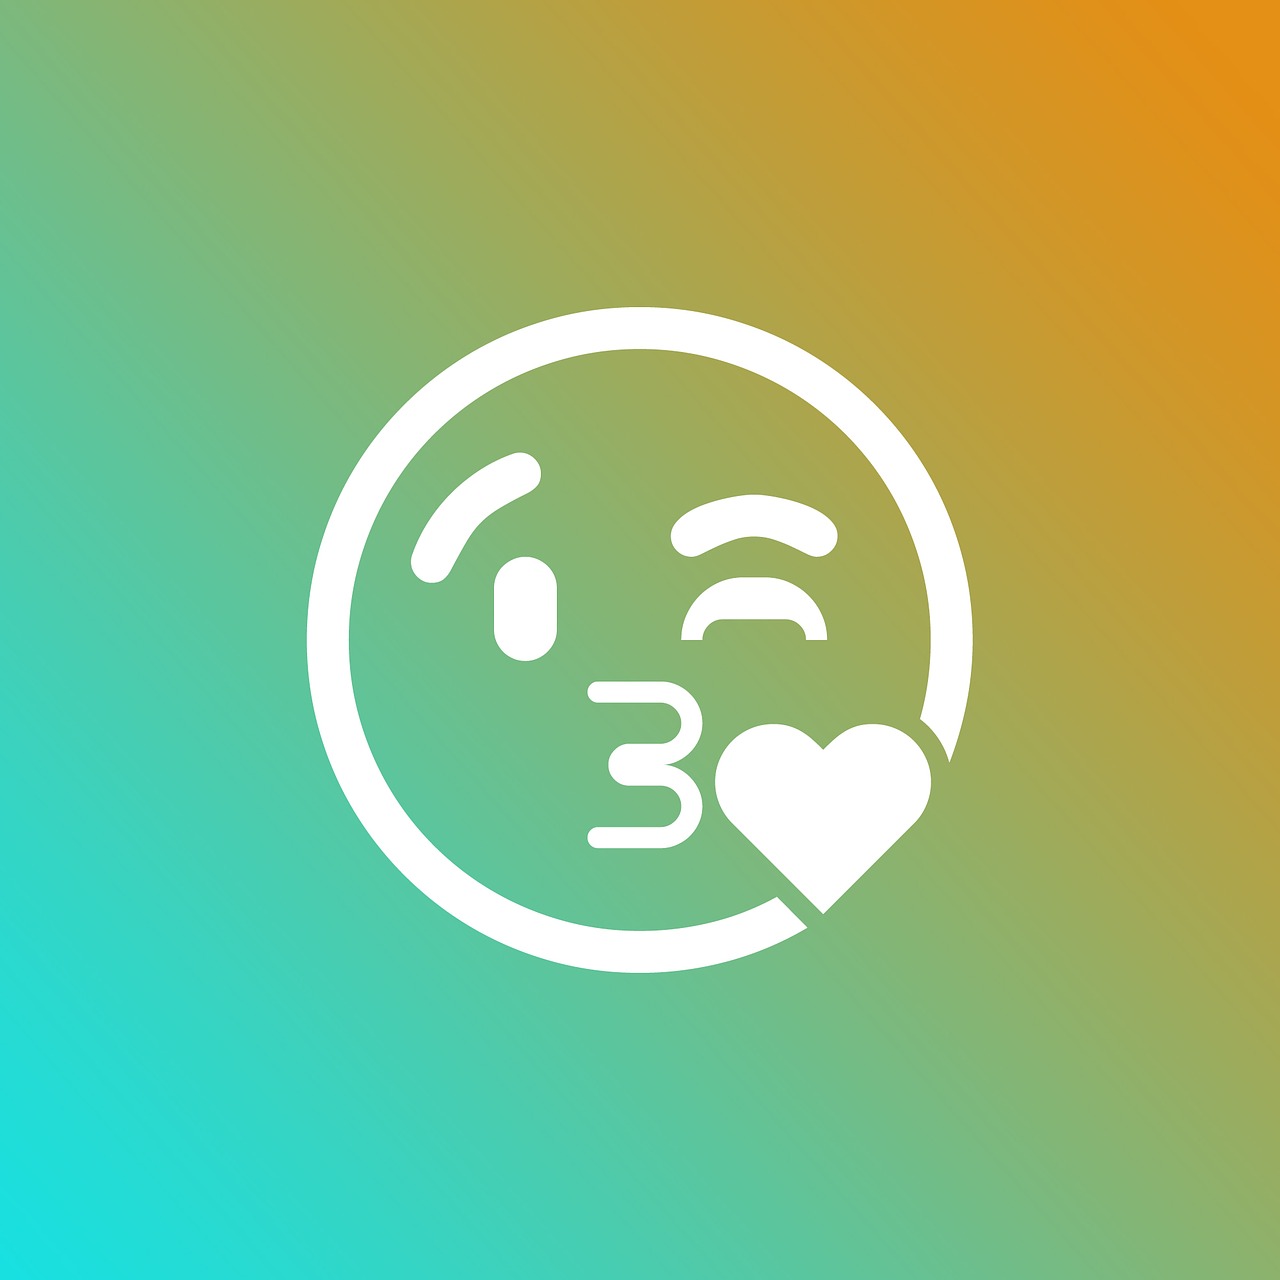 emoji gradient love free photo